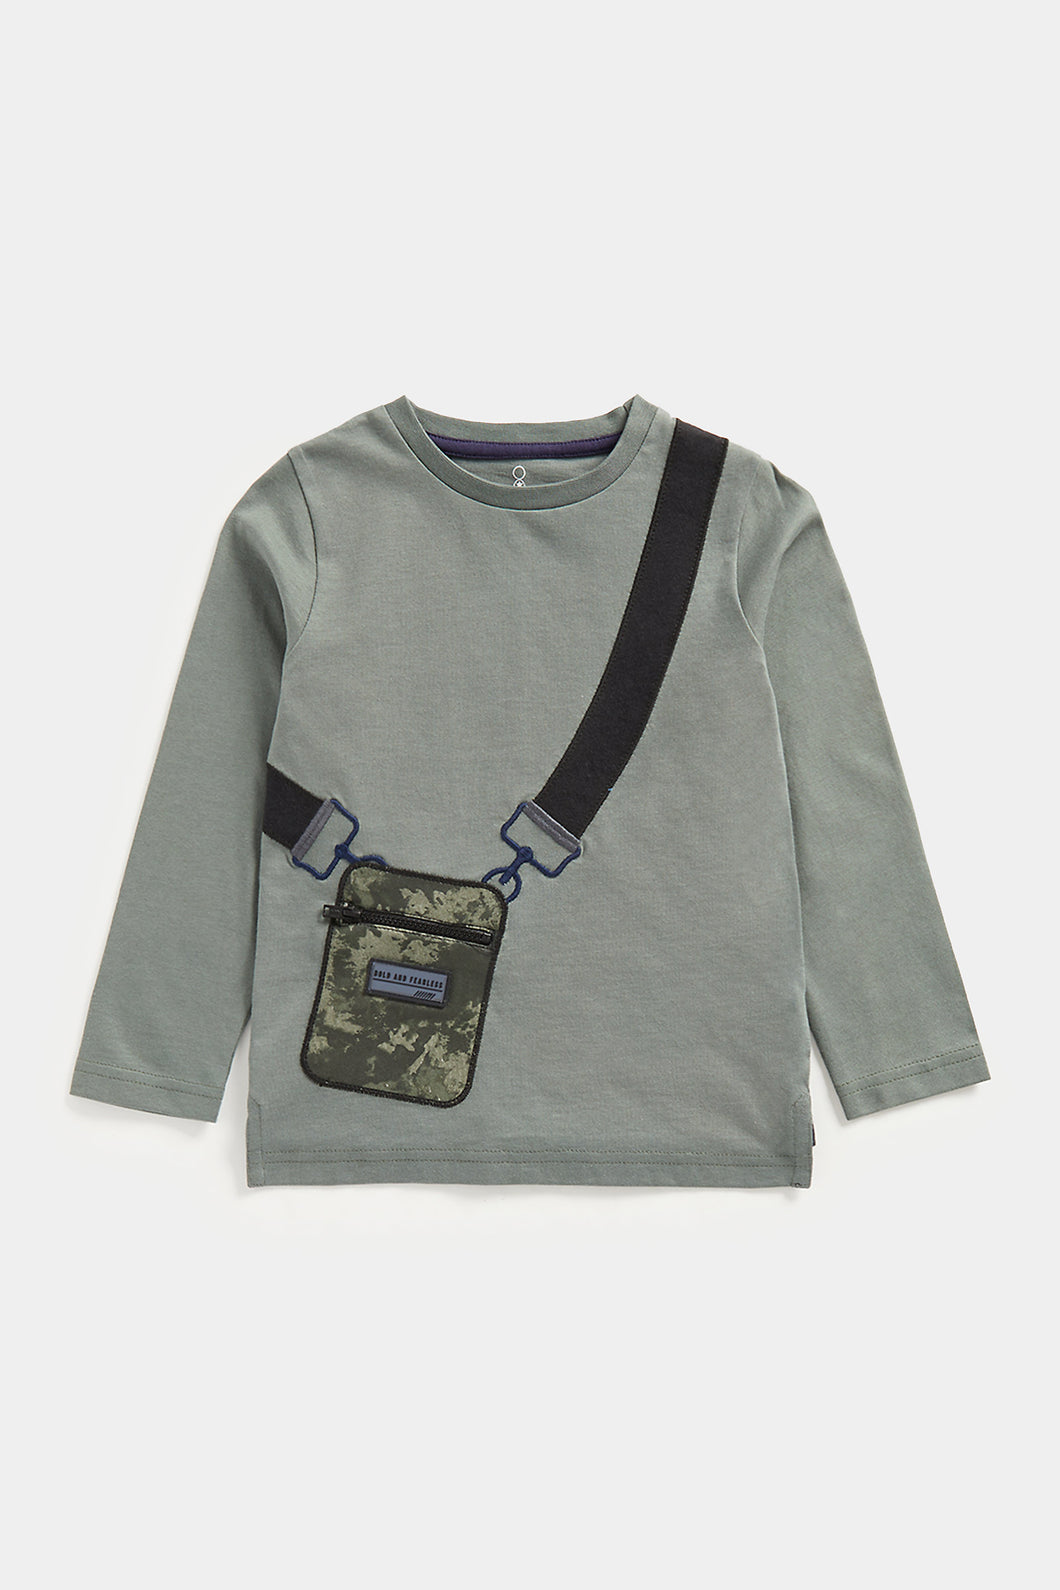 Mothercare Khaki Novelty Bag Long-Sleeved T-Shirt